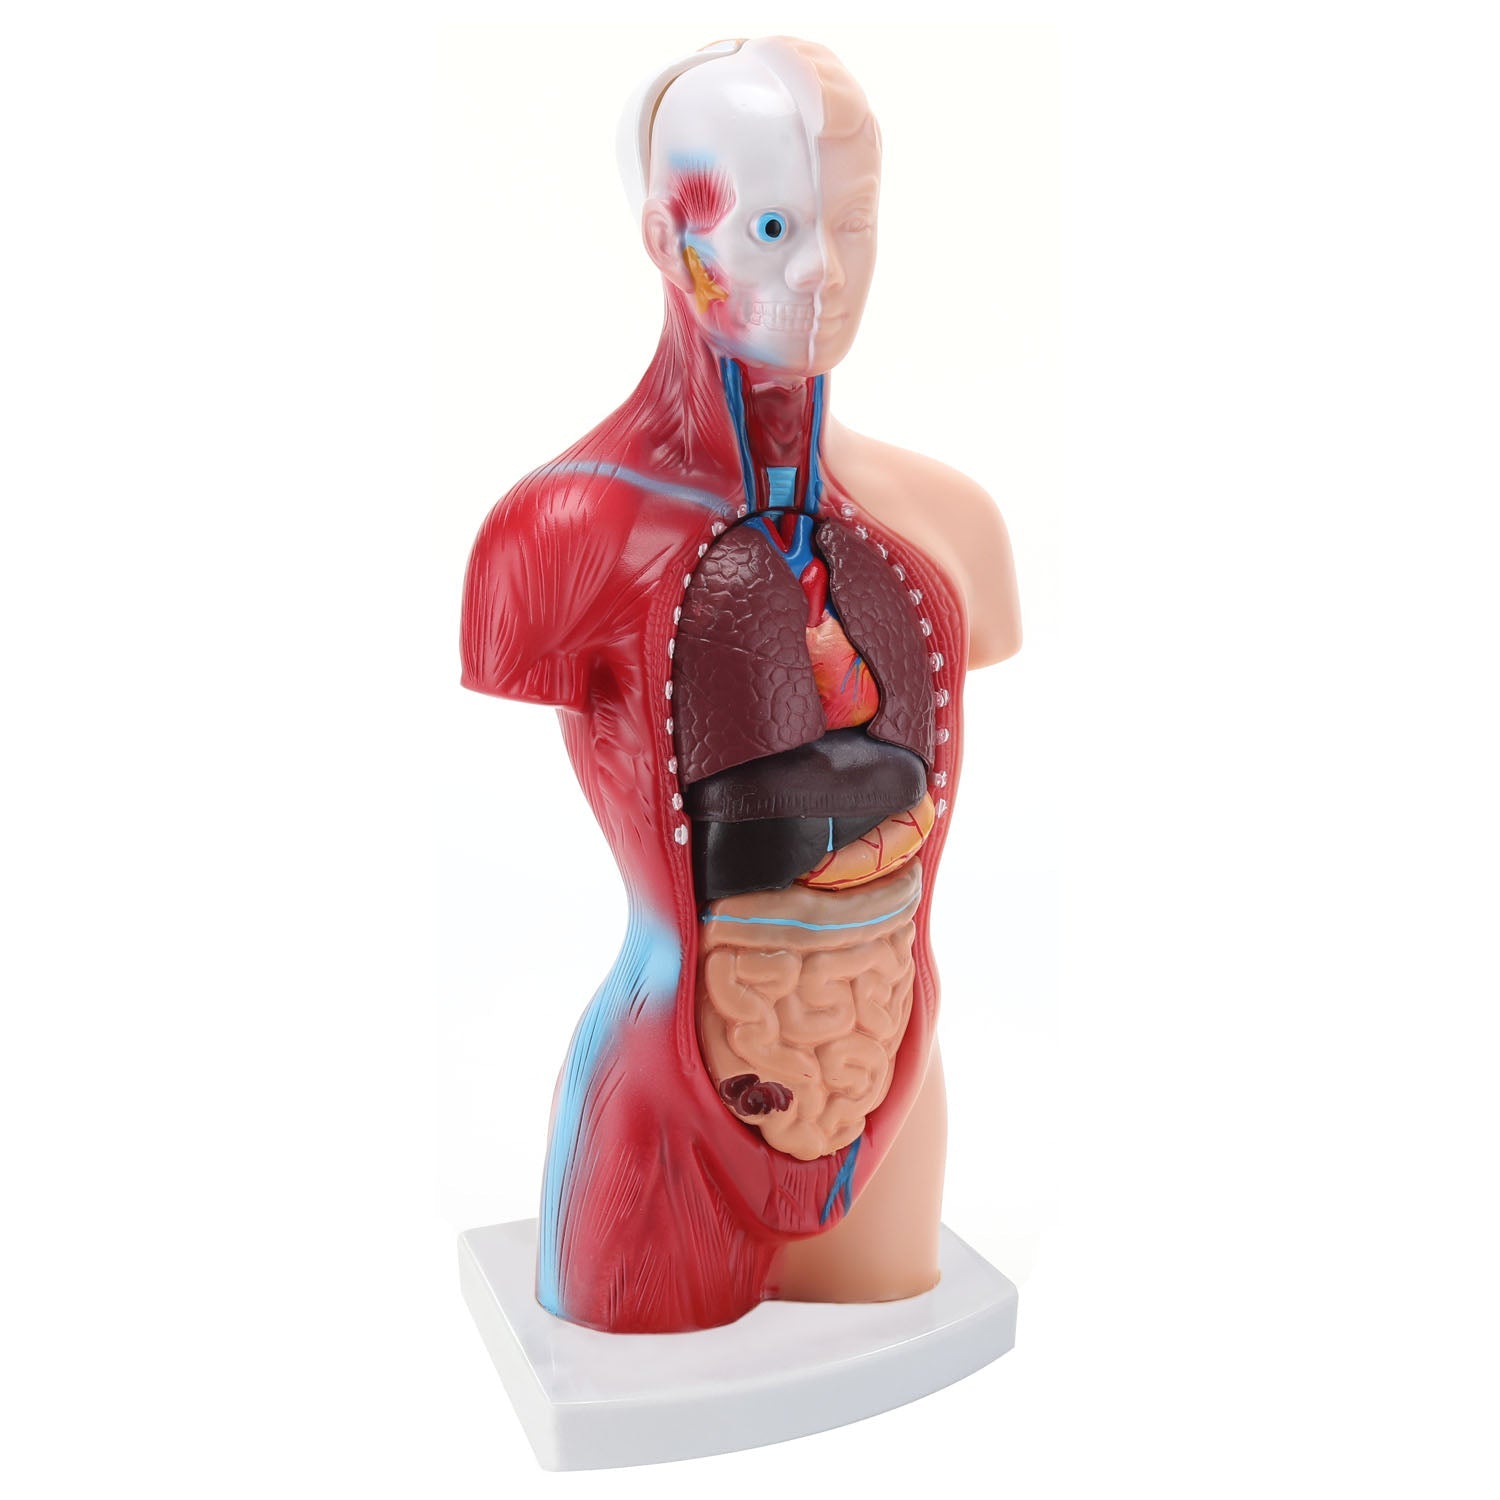 RONTRN,anatomy models, anatomical models, medical education models, teaching models, medical simulator,10.6 inch Medical Torso